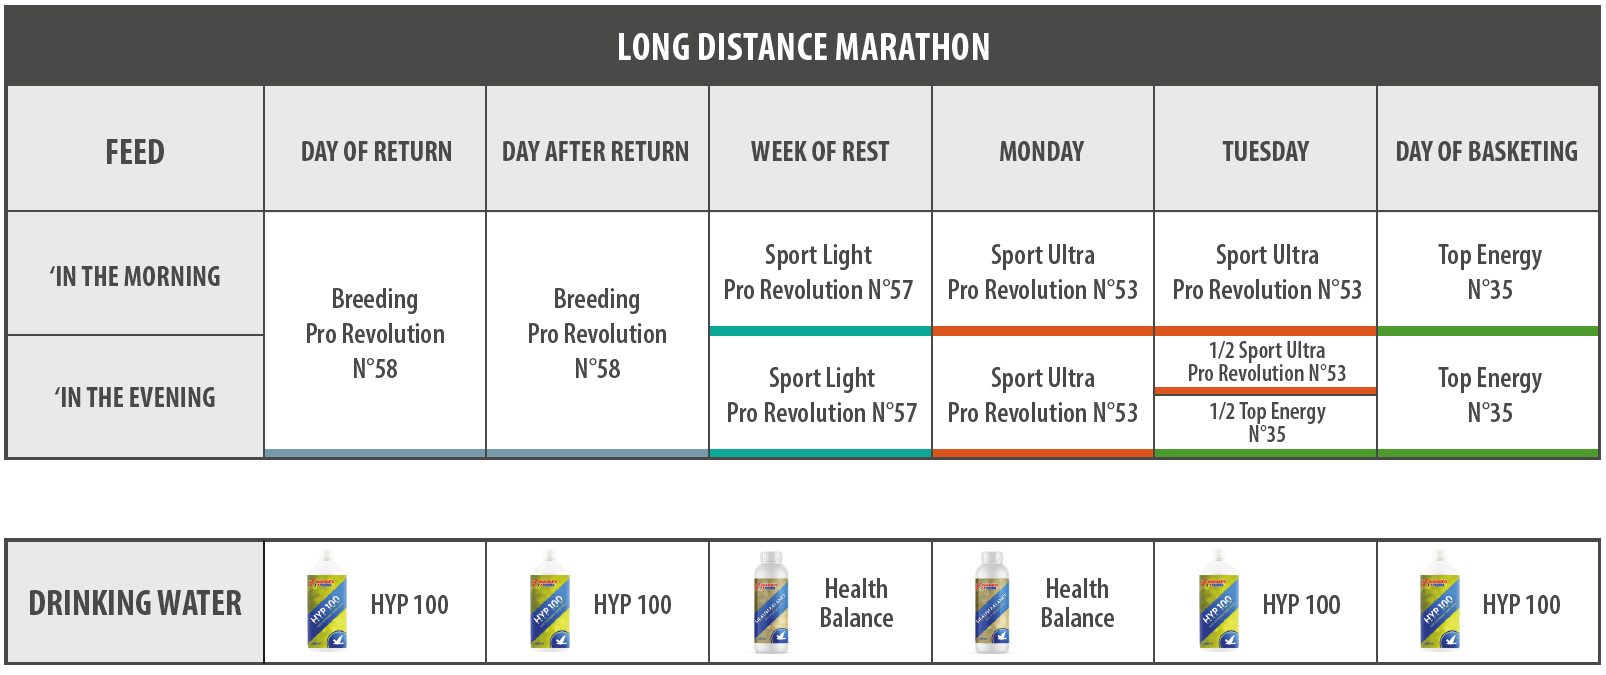 Long Distance Marathon